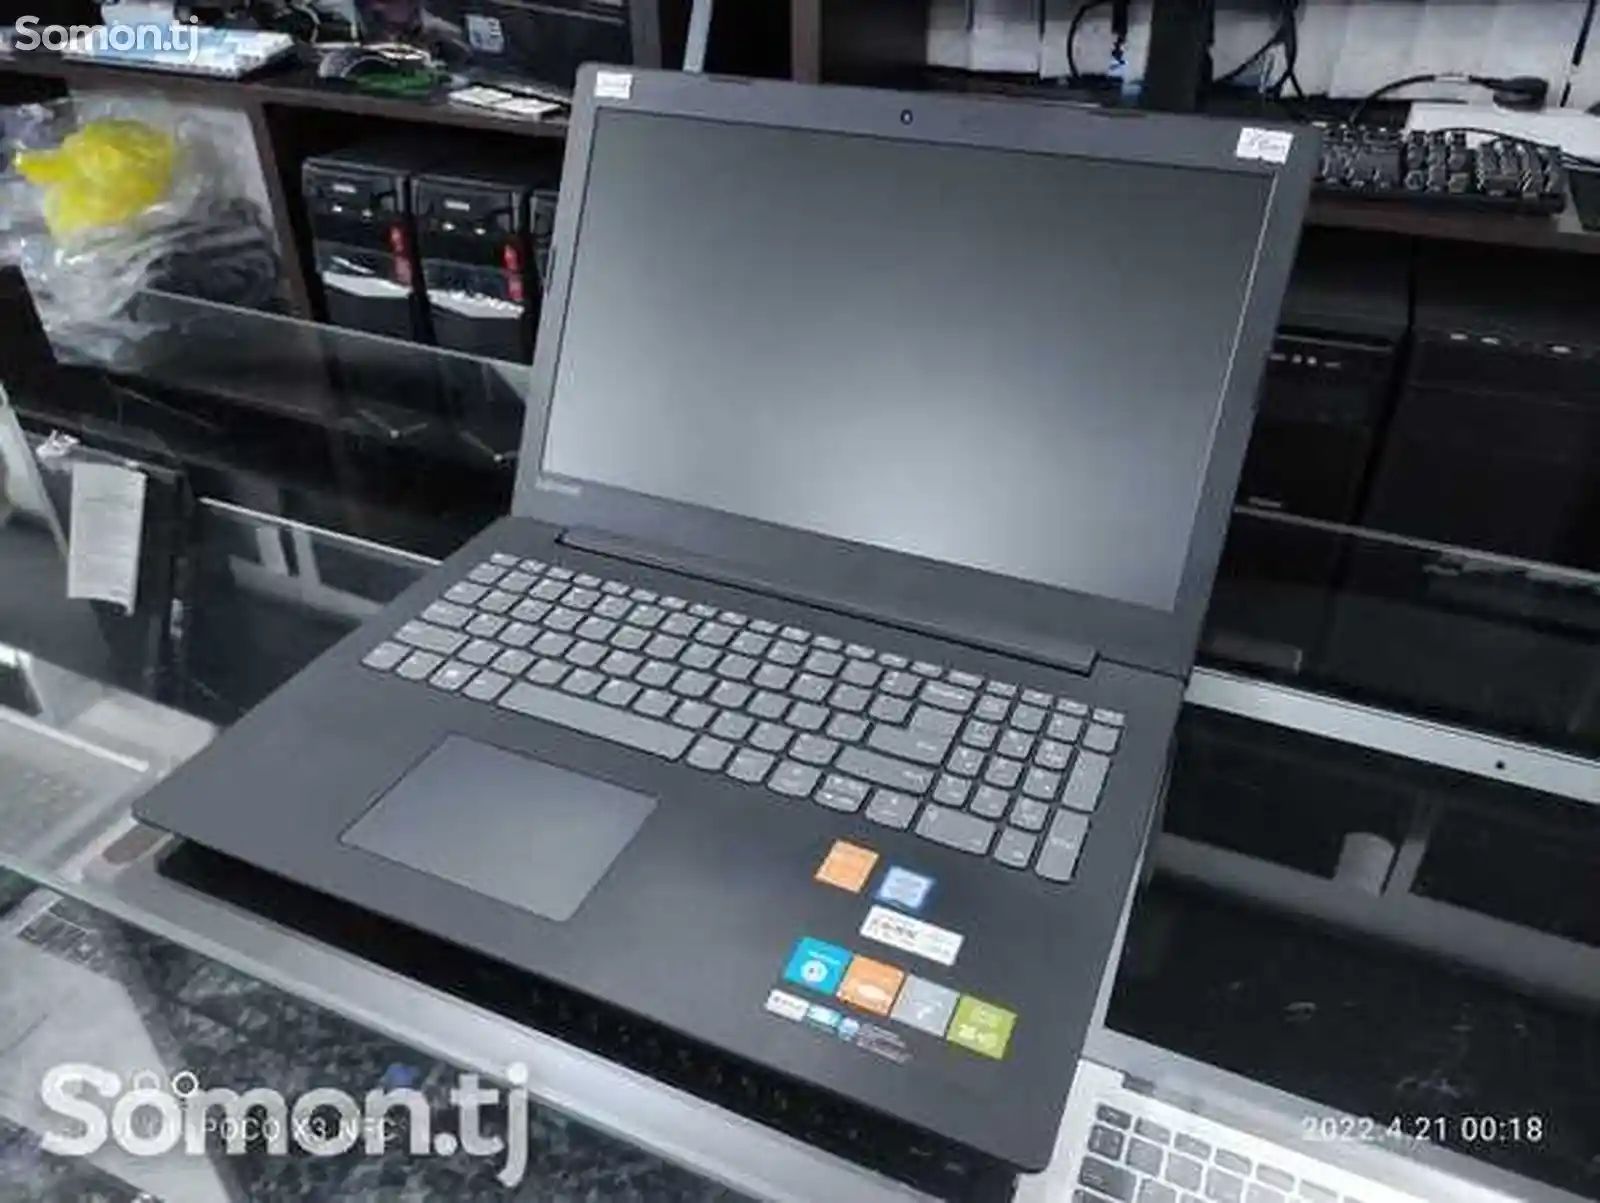 Игровой ноутбук Lenovo Ideapad 320C Core i5-7200U 8GB/1TB 7TH GEN-1